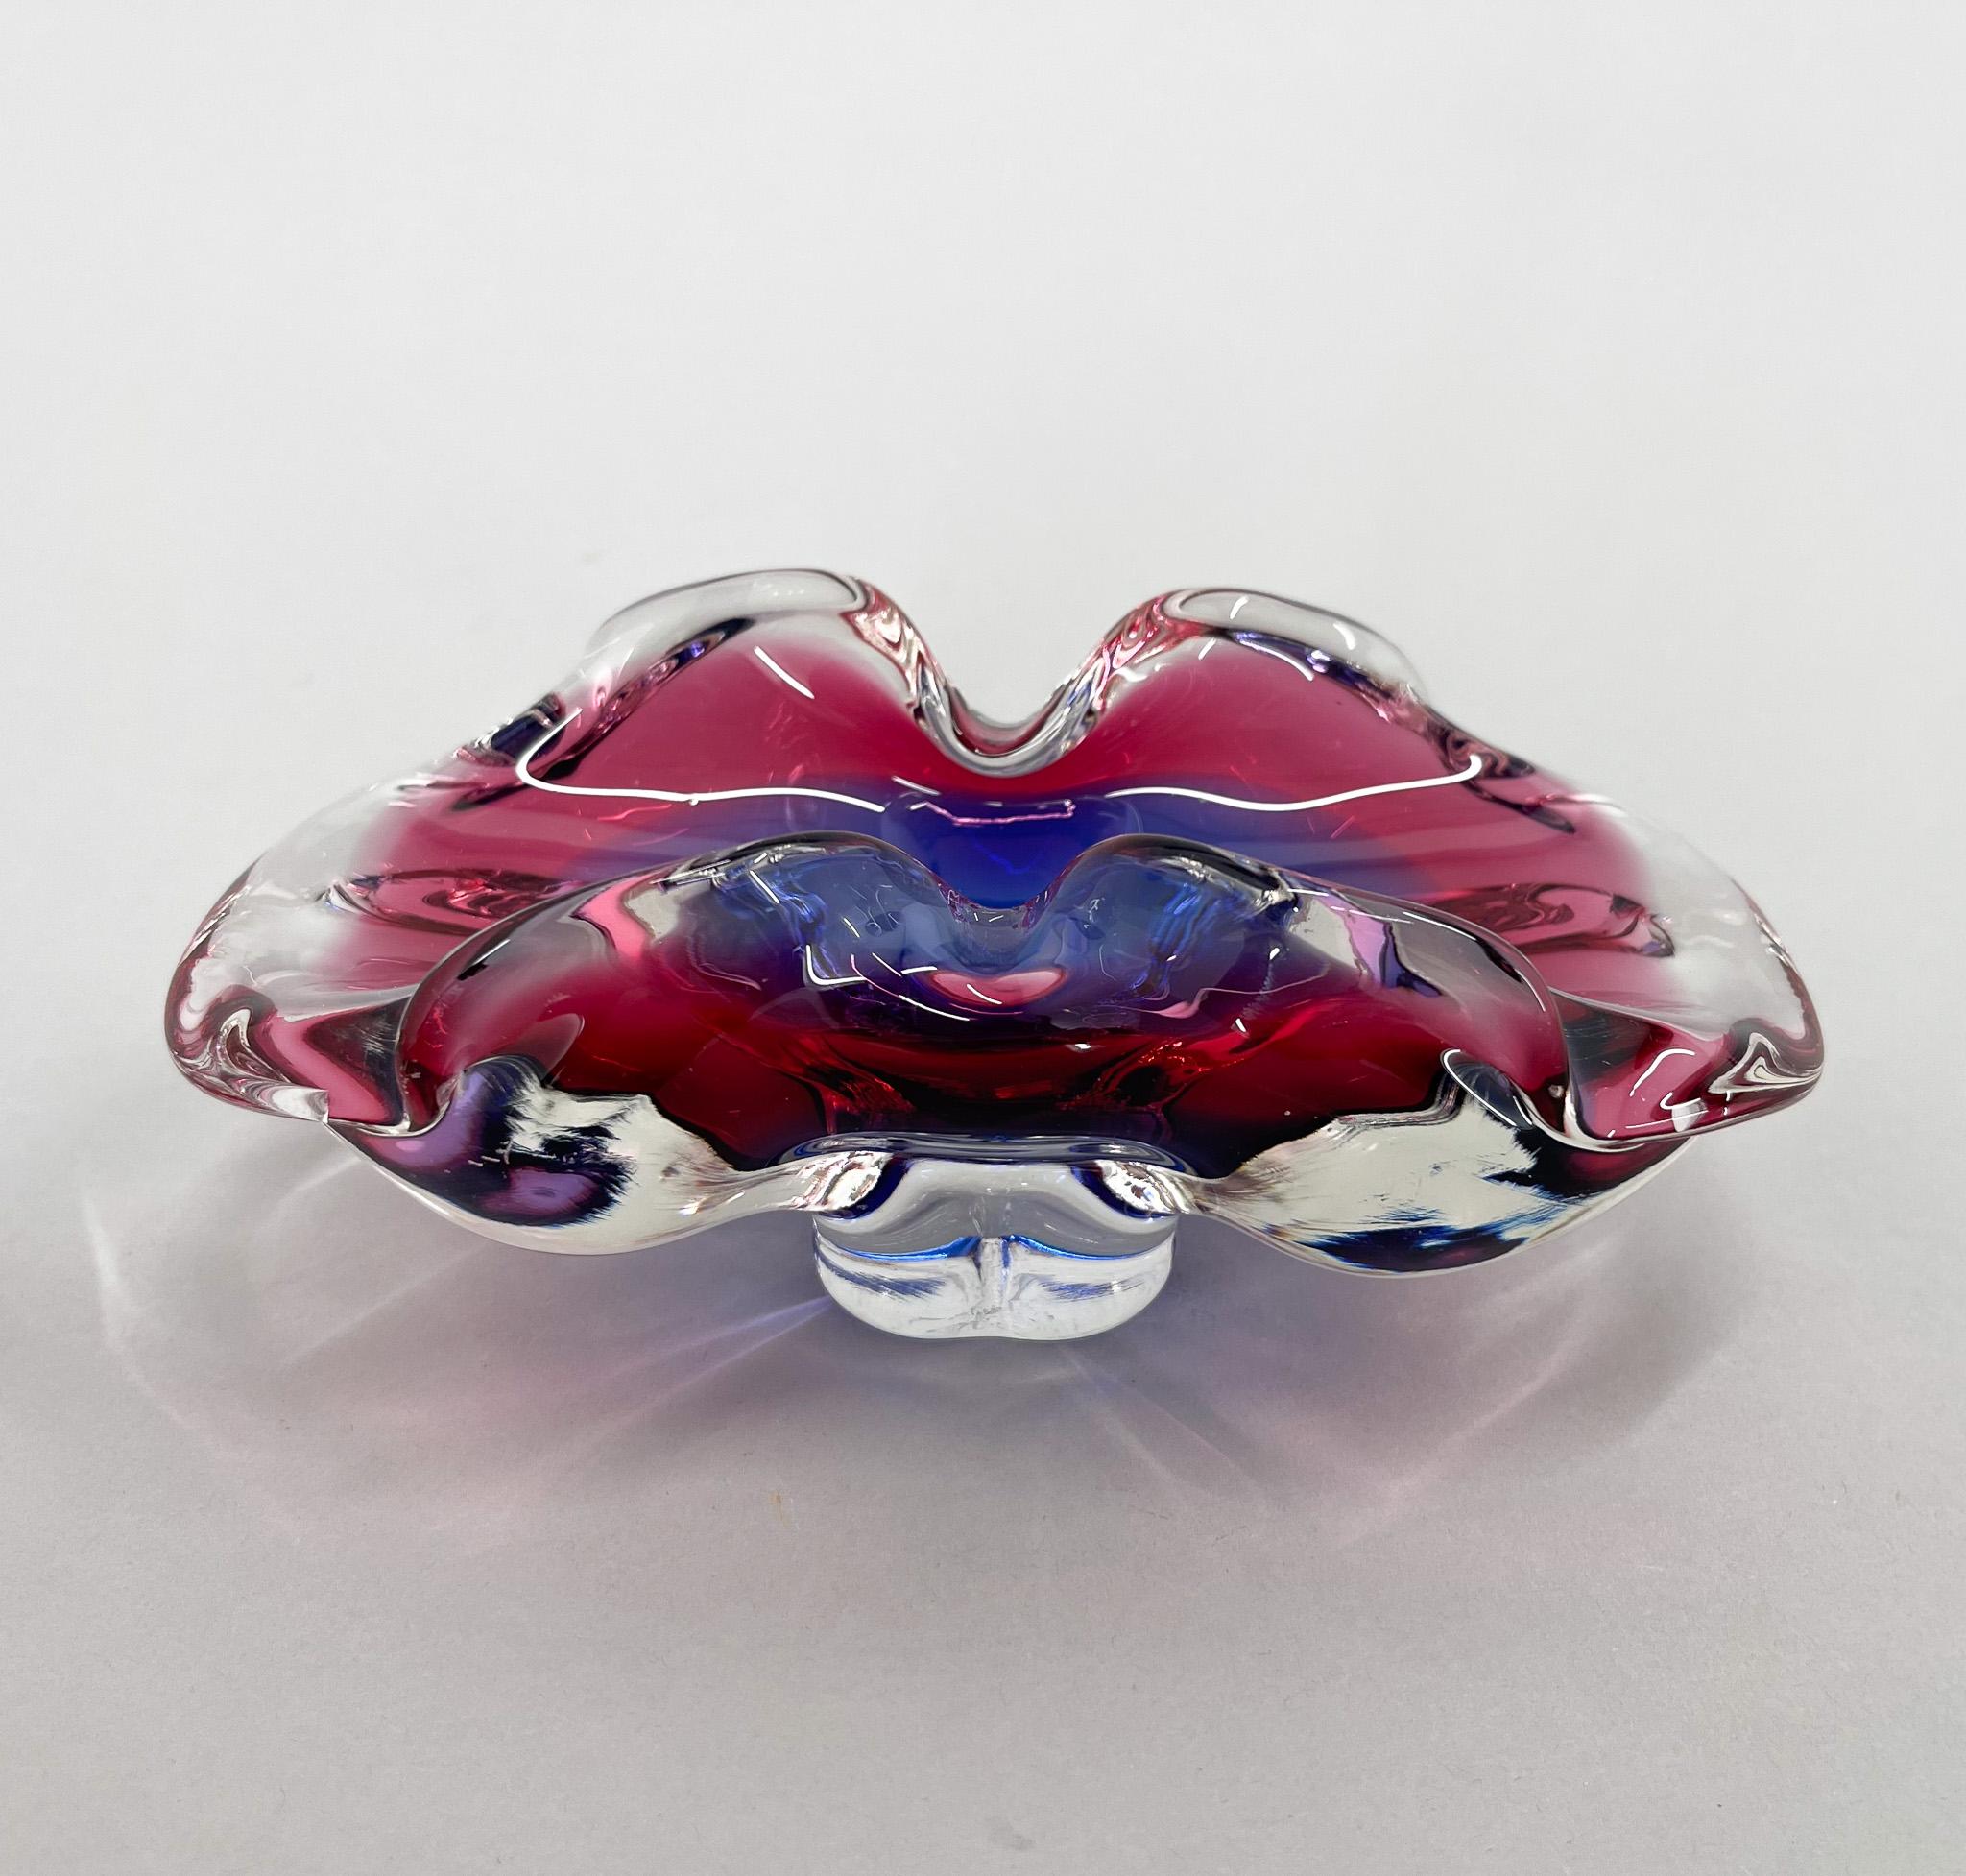 Vintage art glass bowl by the glass designer Josef Hospodka, produced in Chribska Glassworks in Czechoslovakia in the 1960's.